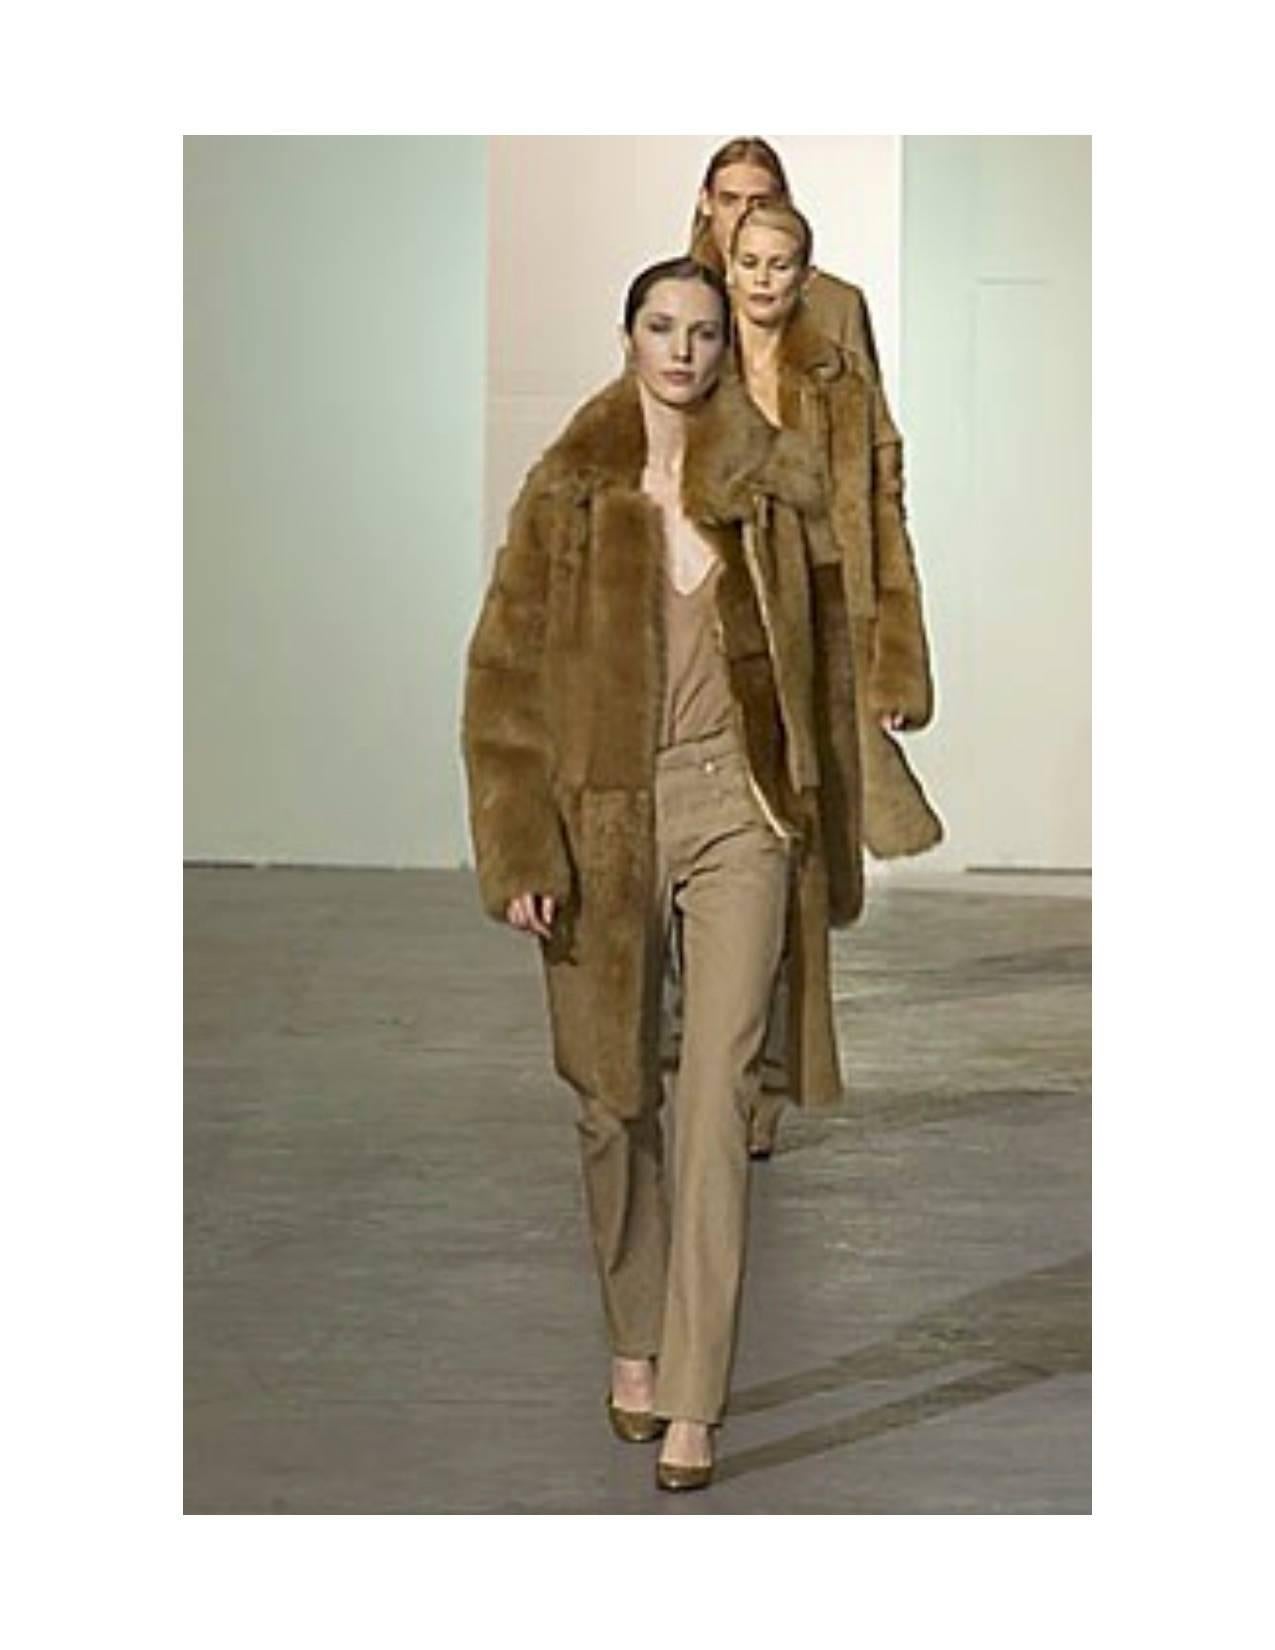 Brown 2000 Helmut Lang tan shearling runway coat with double collar